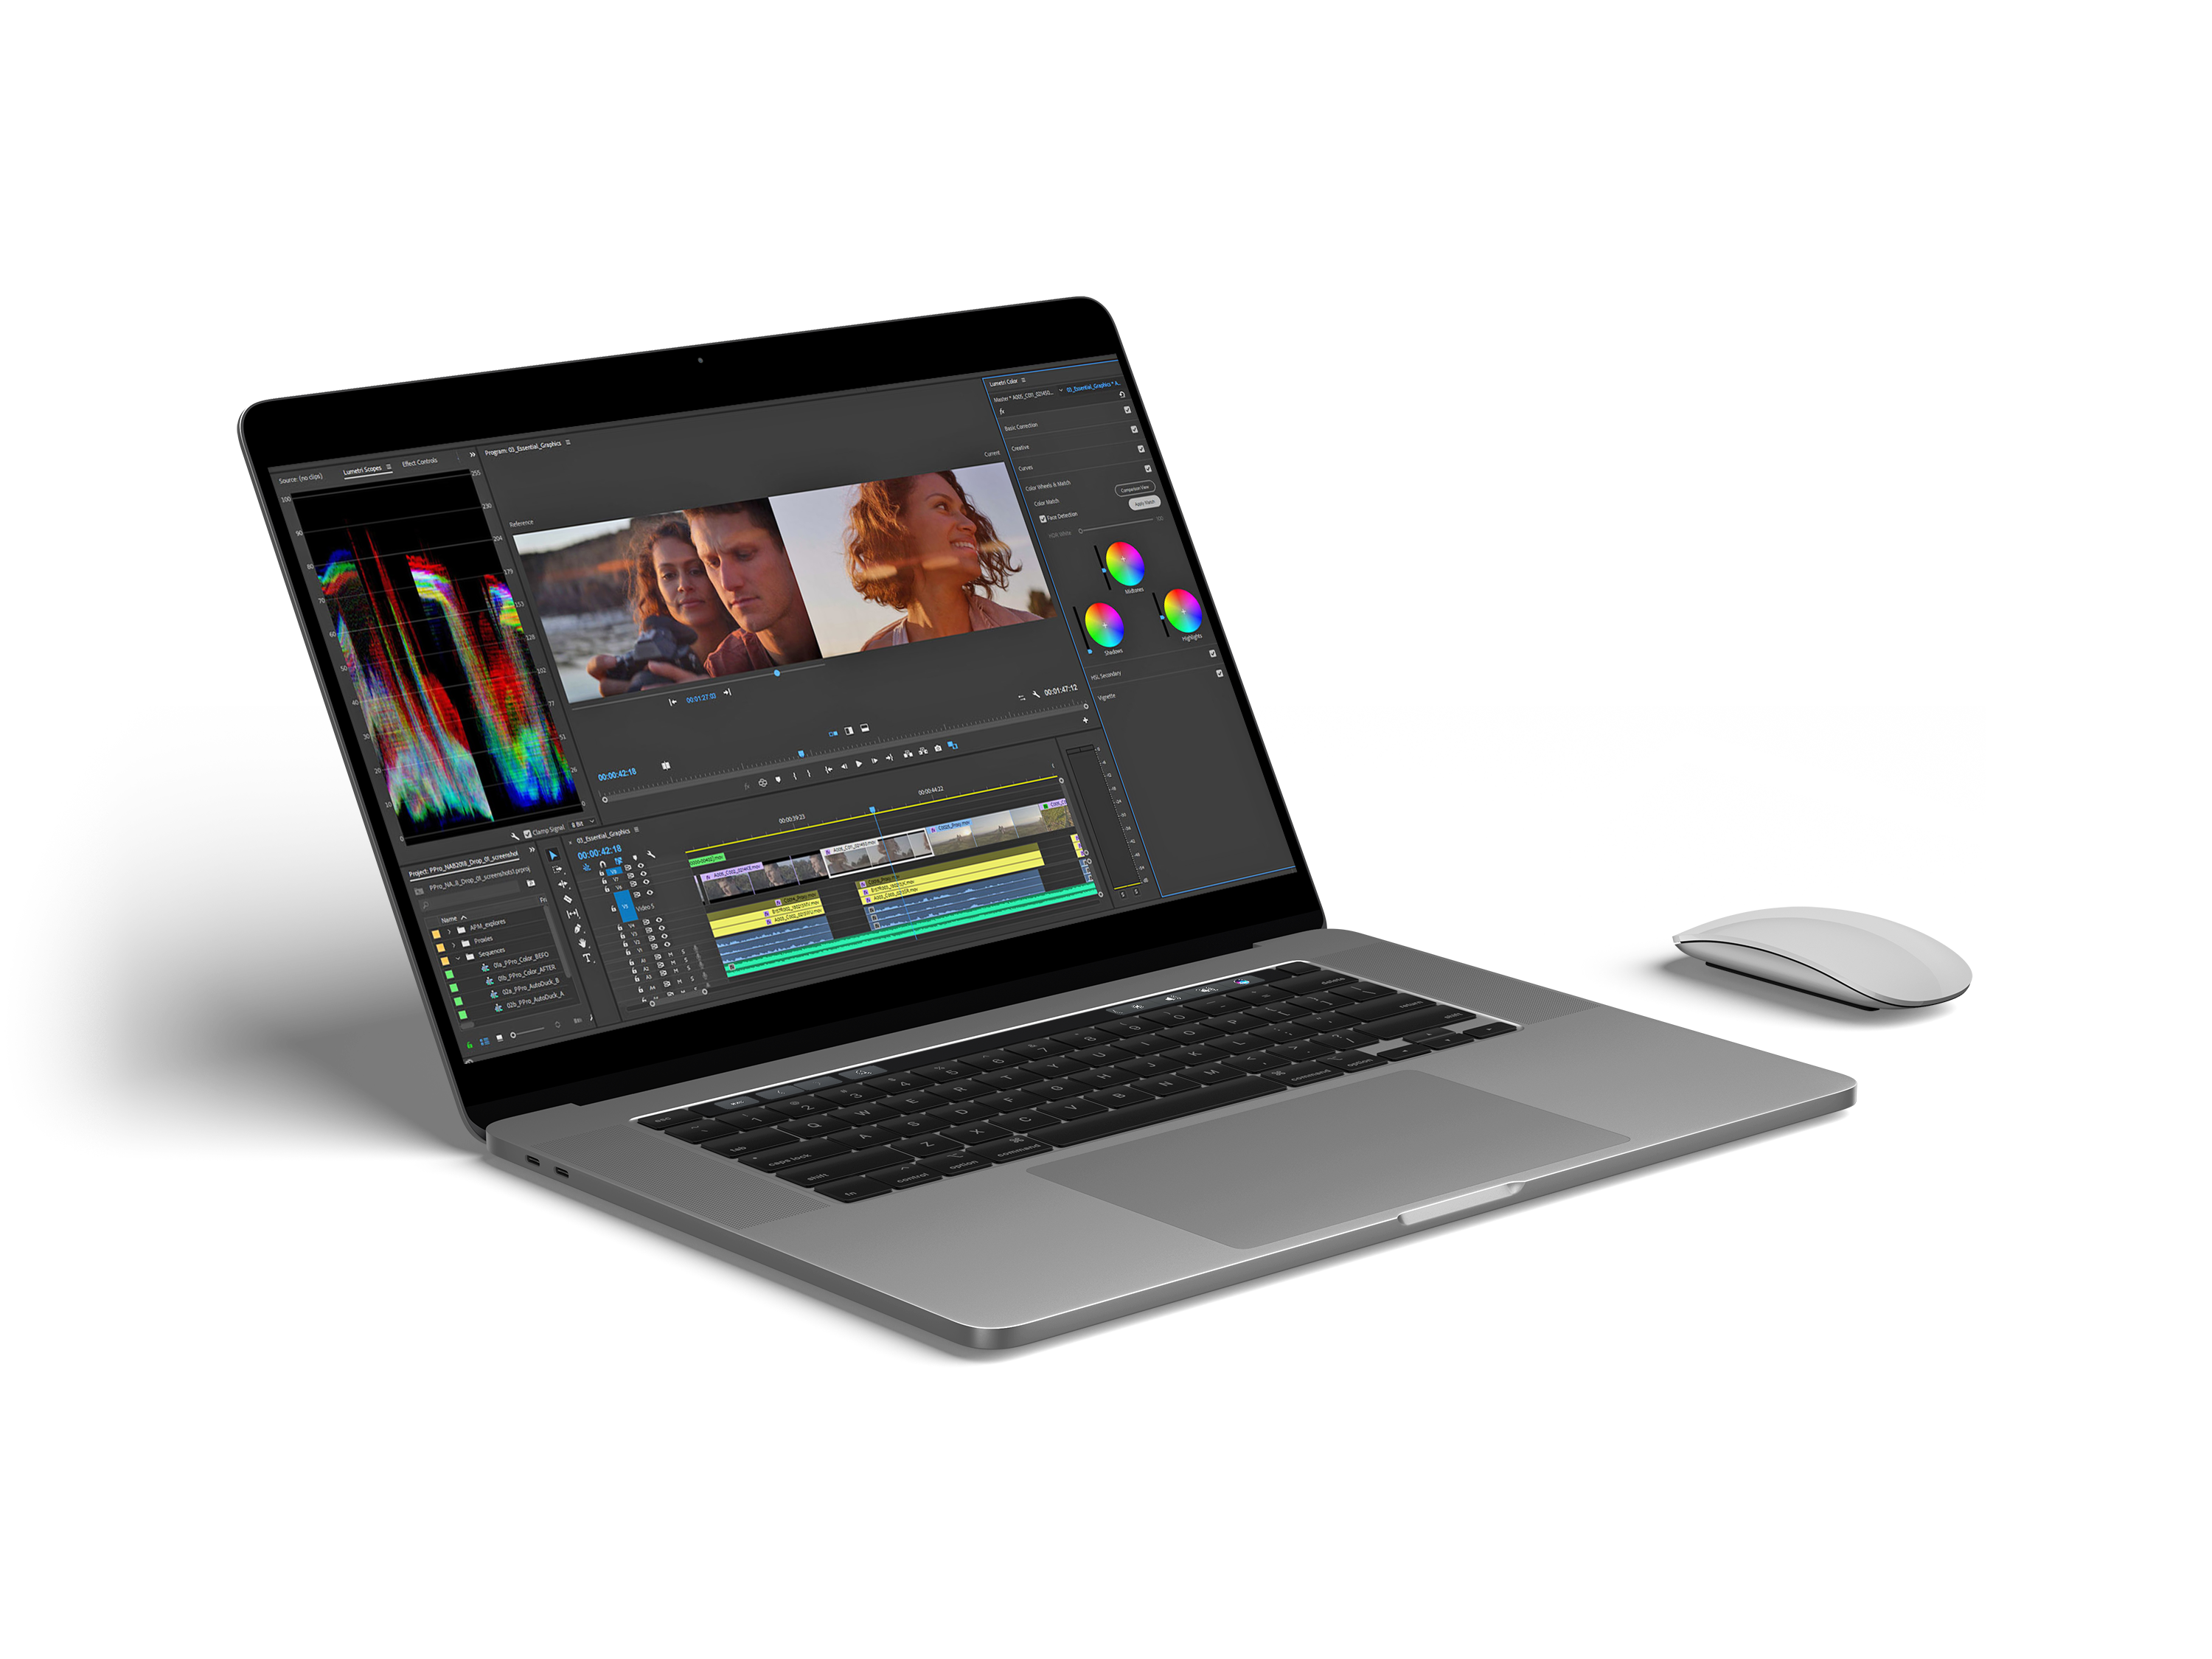 Adobe premiere pro running on a macbook